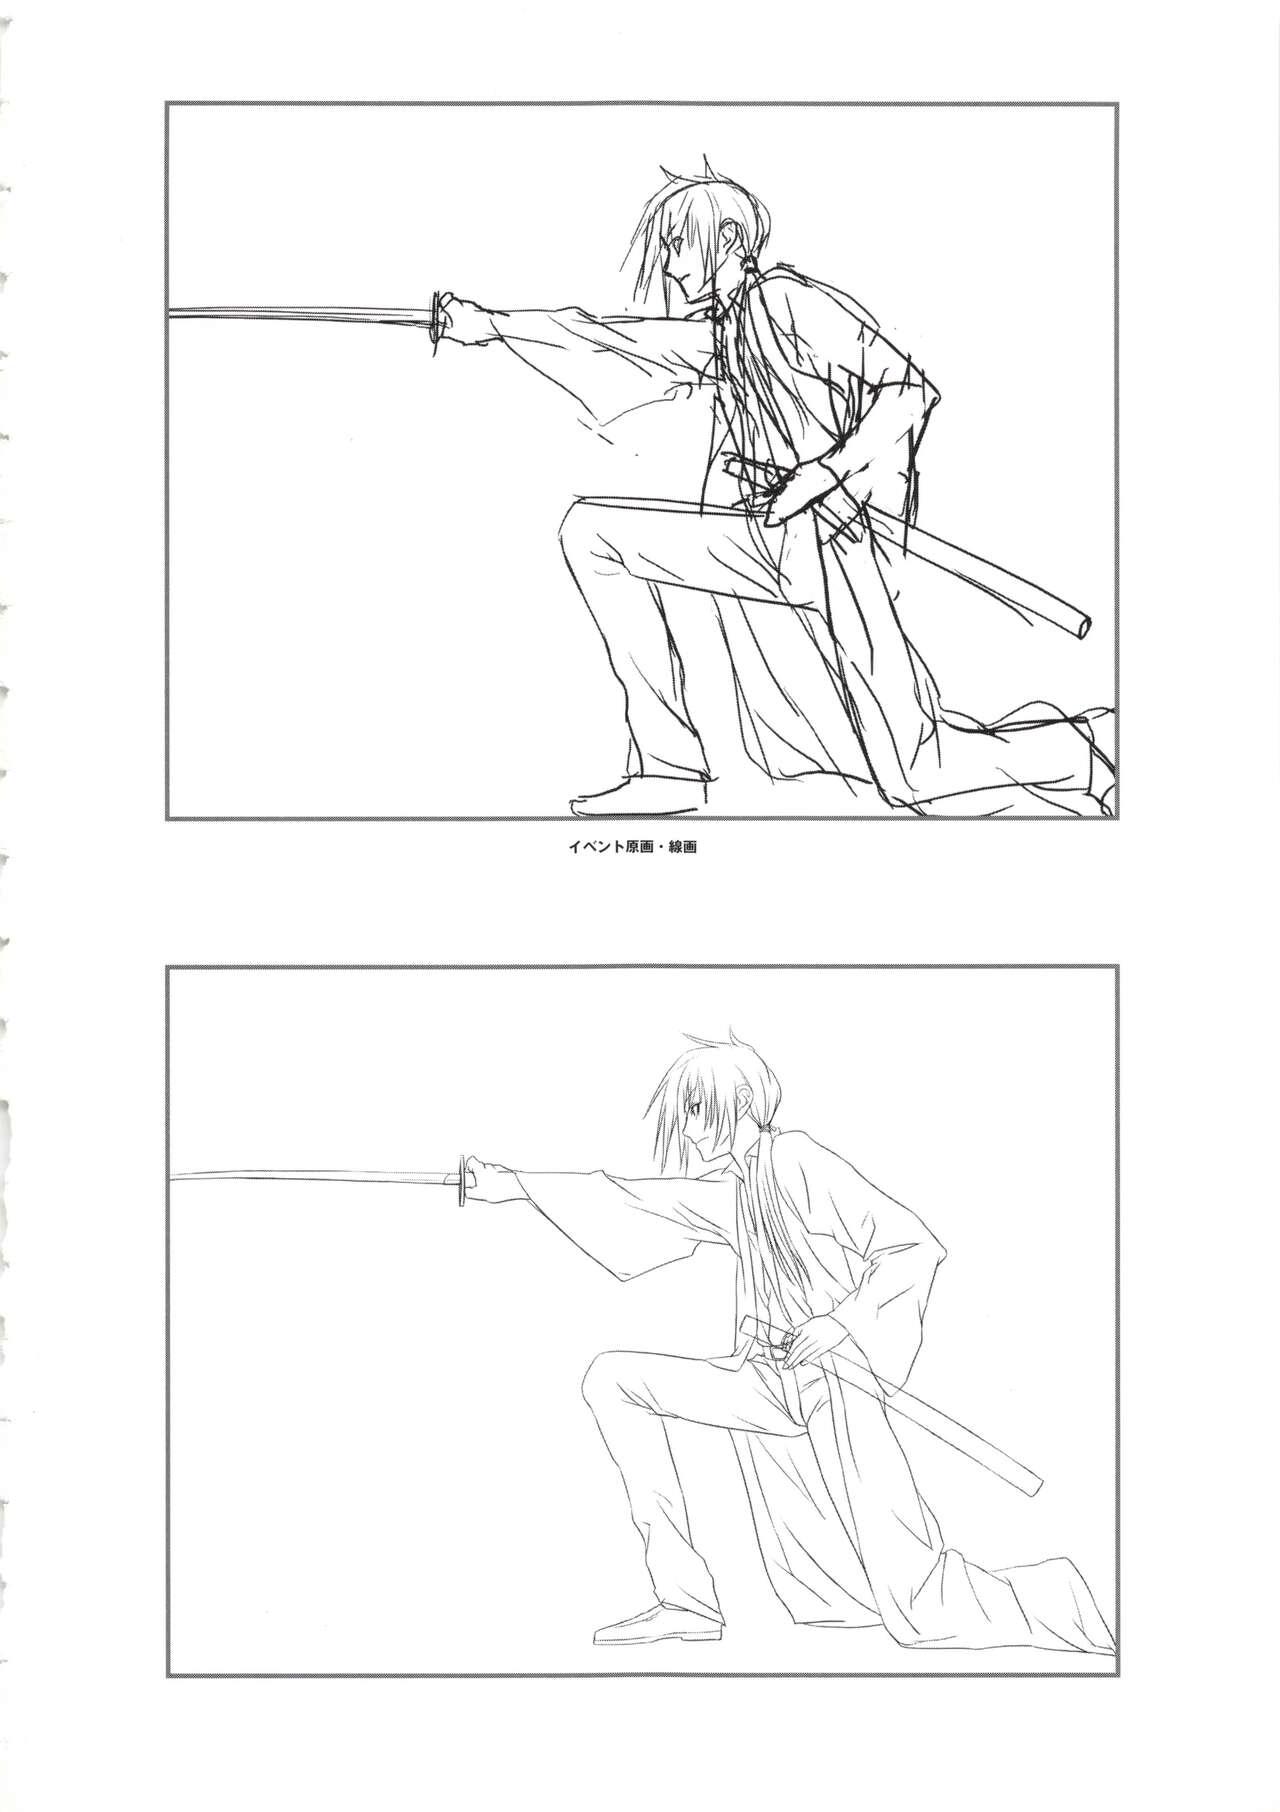 Hanachirasu - Initial Sketches and Unprocessed Illustrations - Selection 37